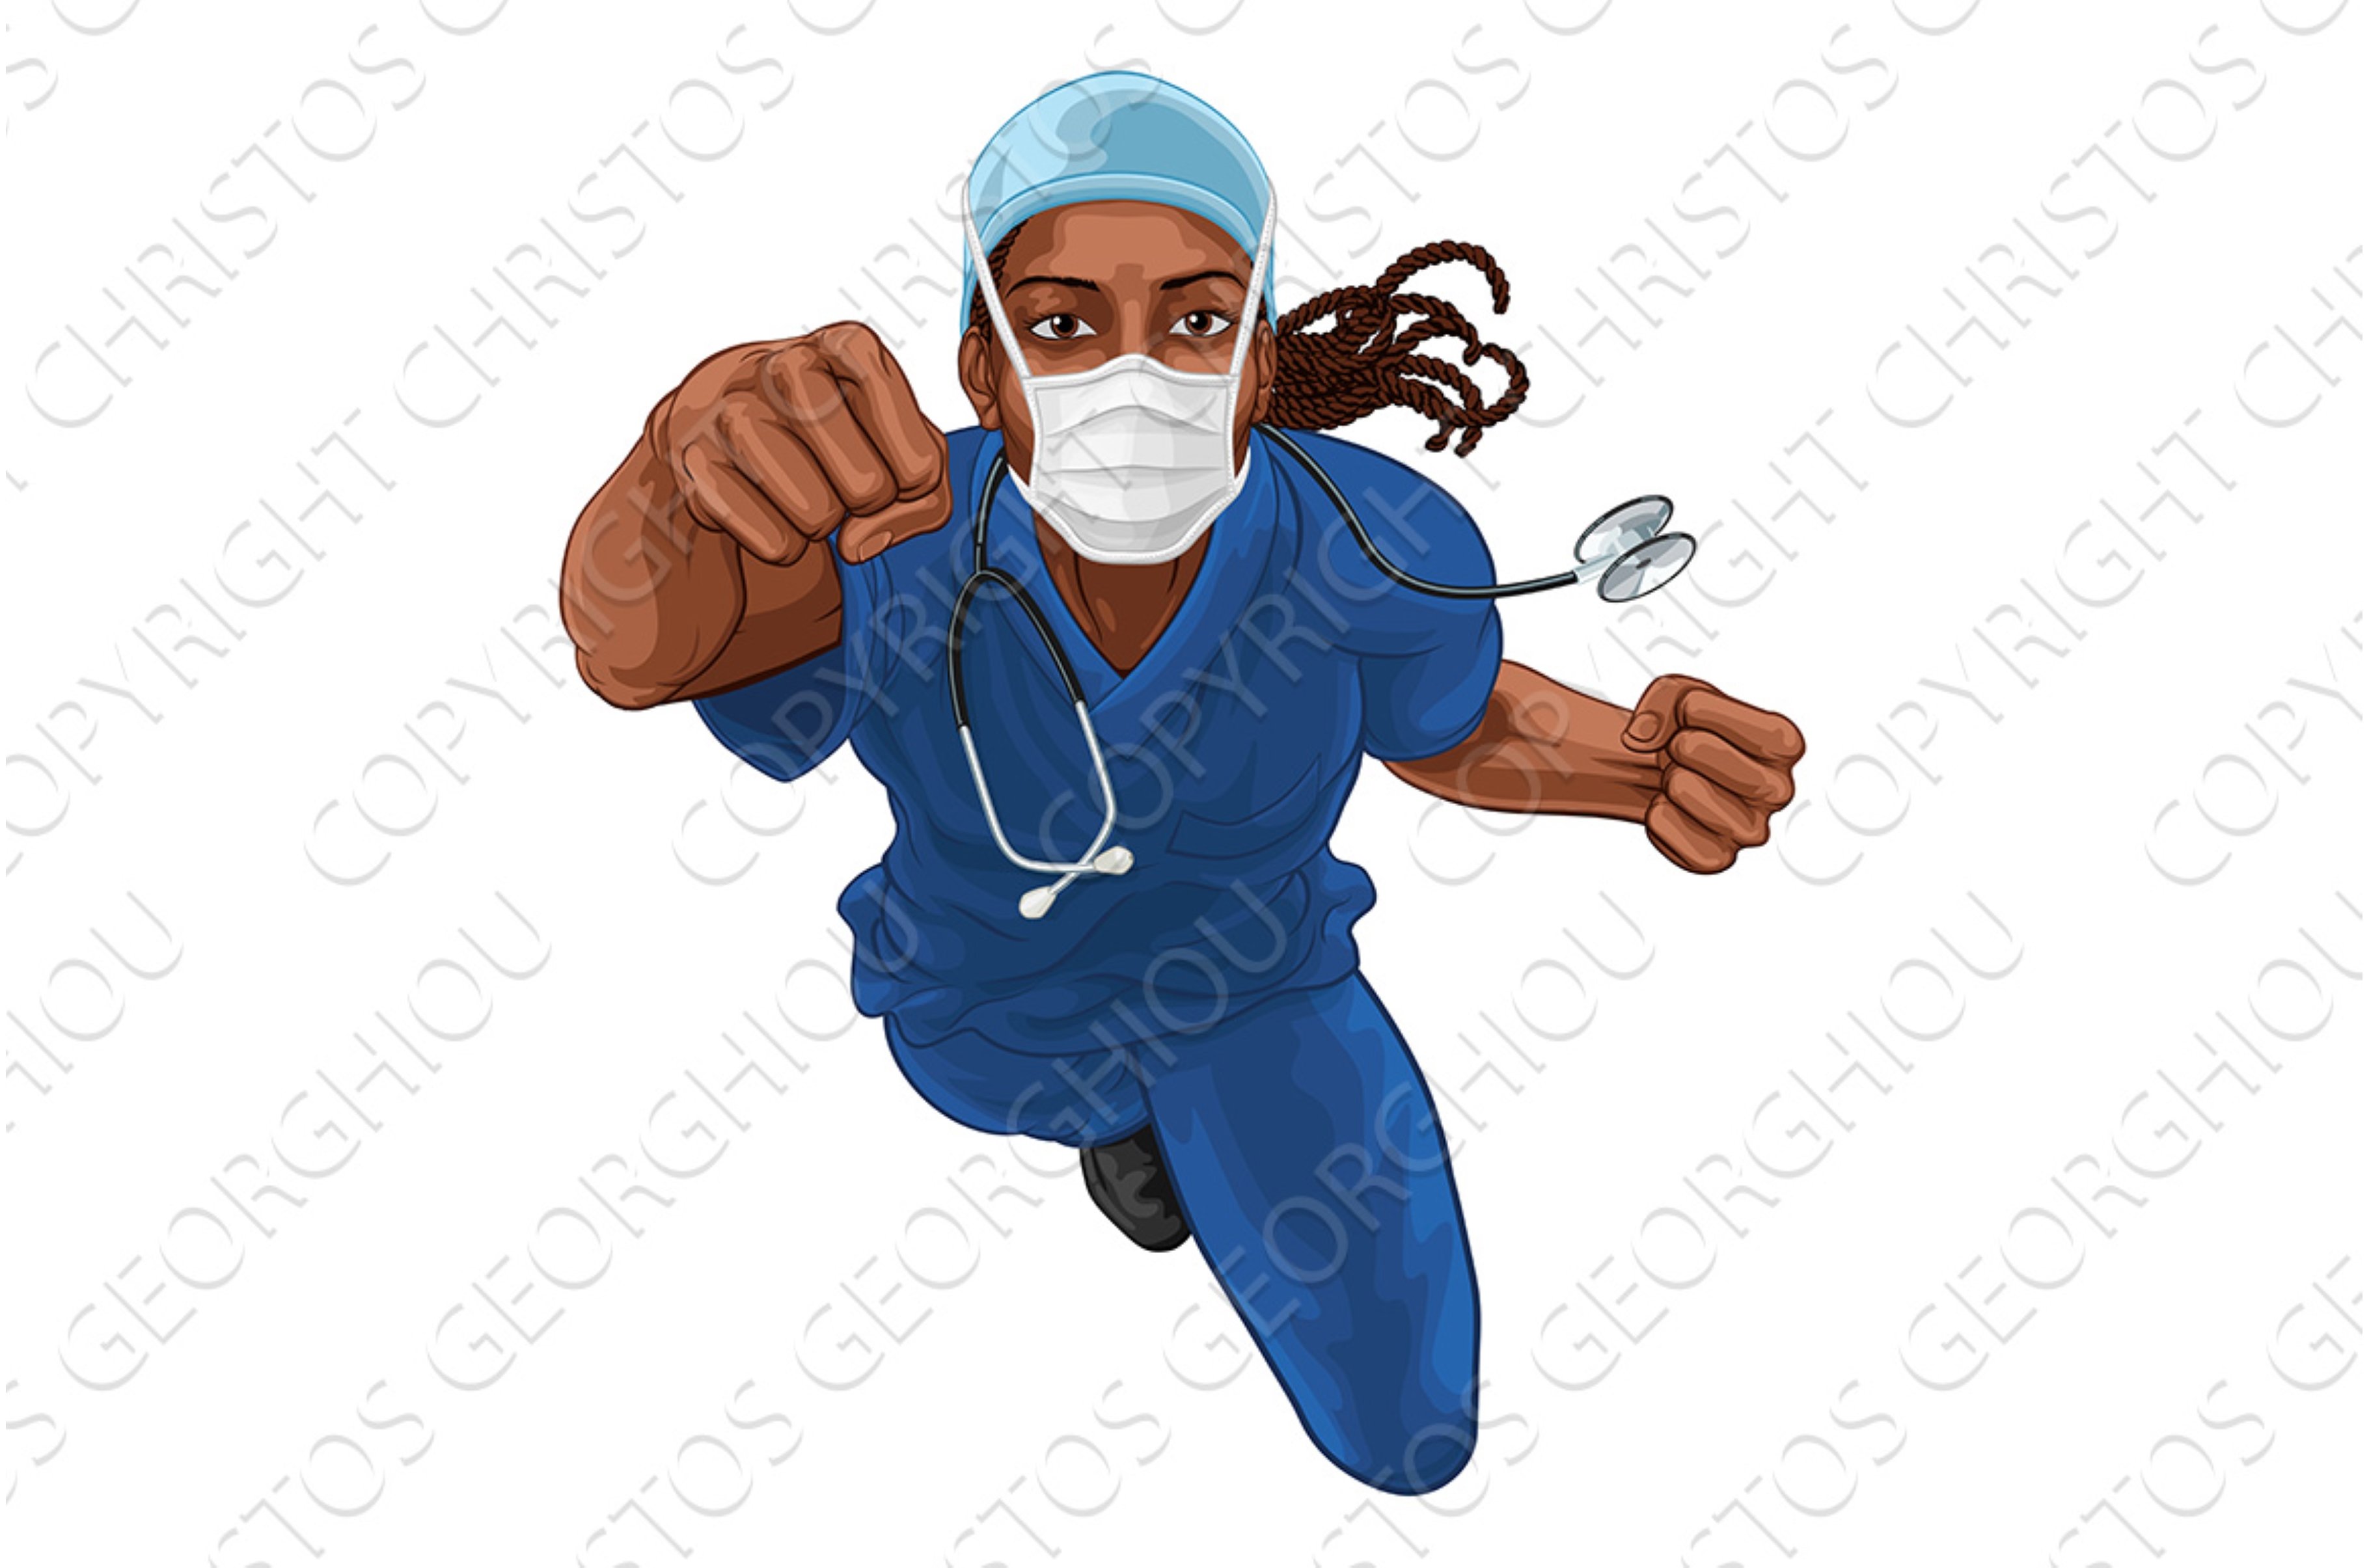 Super Hero Black Woman Doctor Nurse cover image.